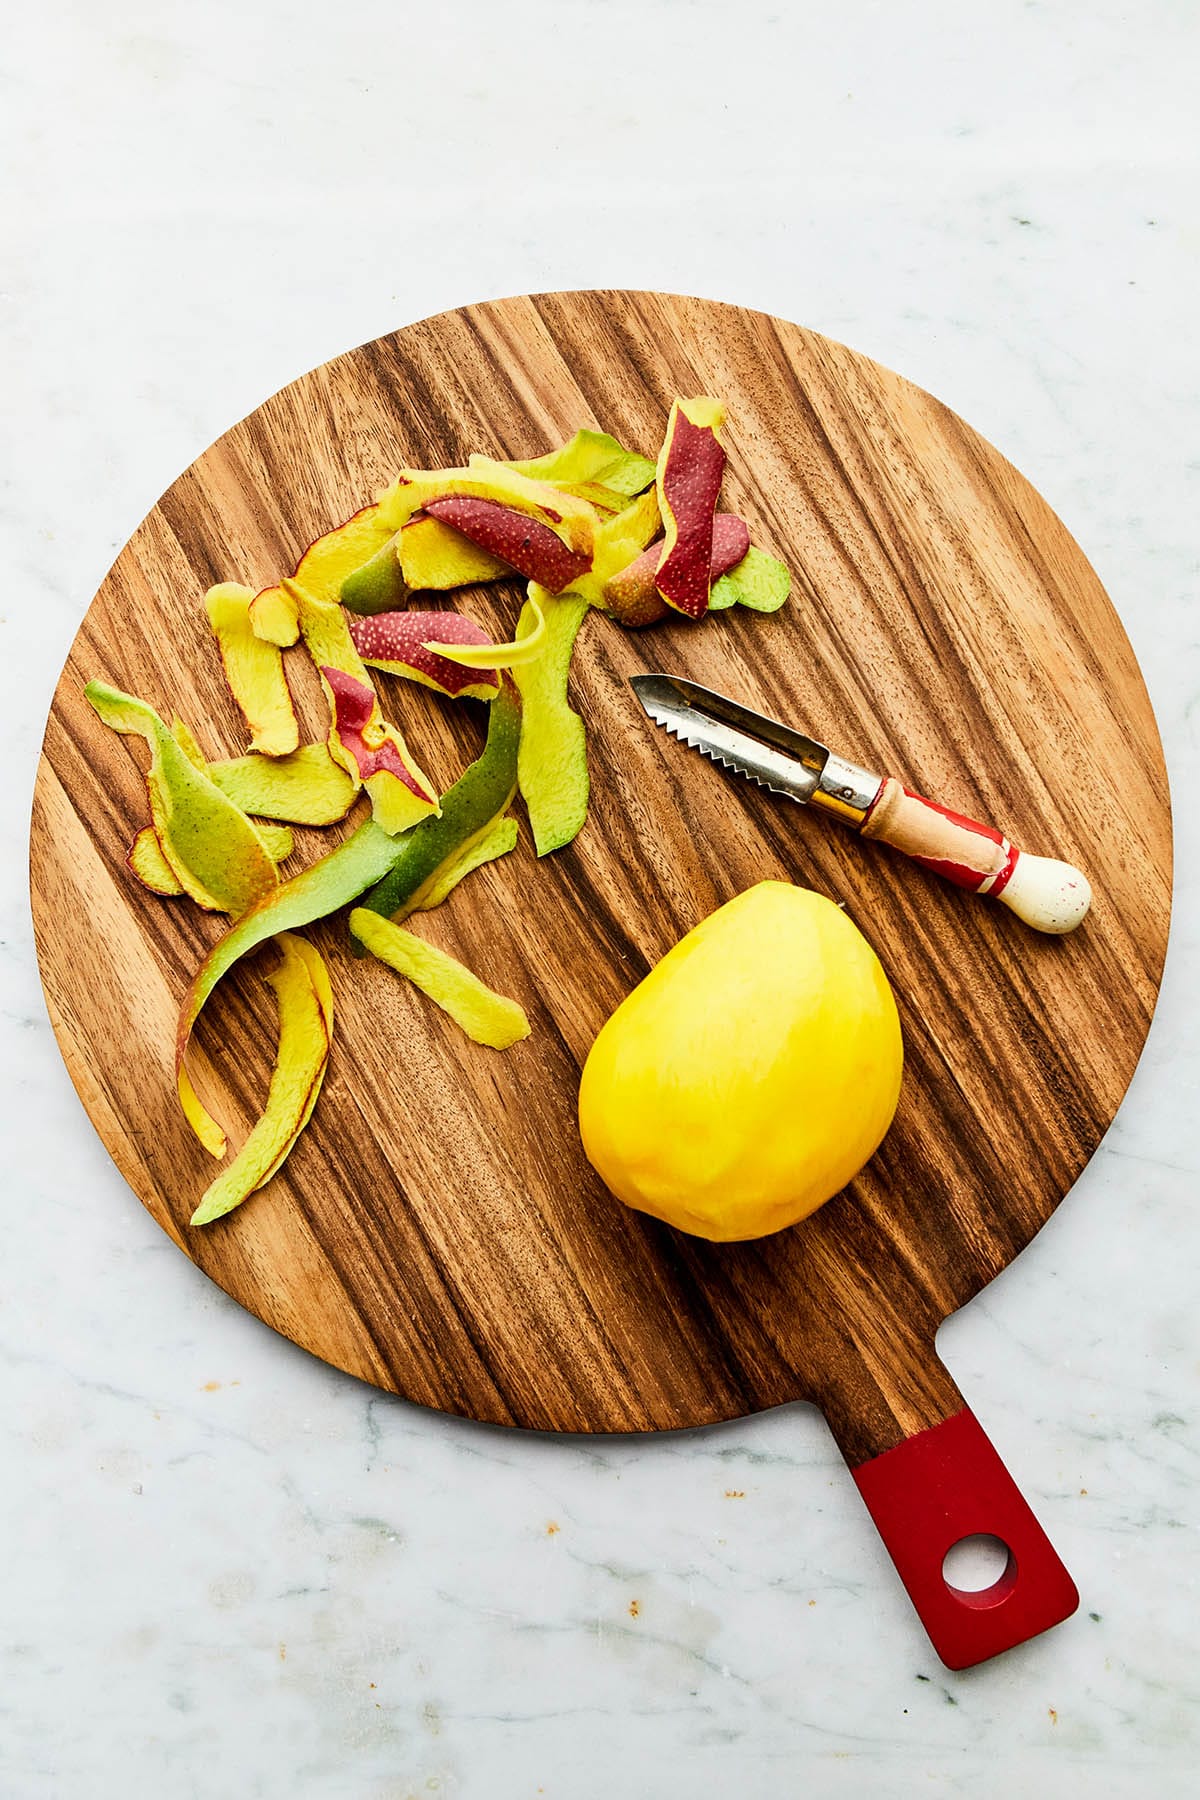 A peeled mango on a cutting board with the peeler alongside.